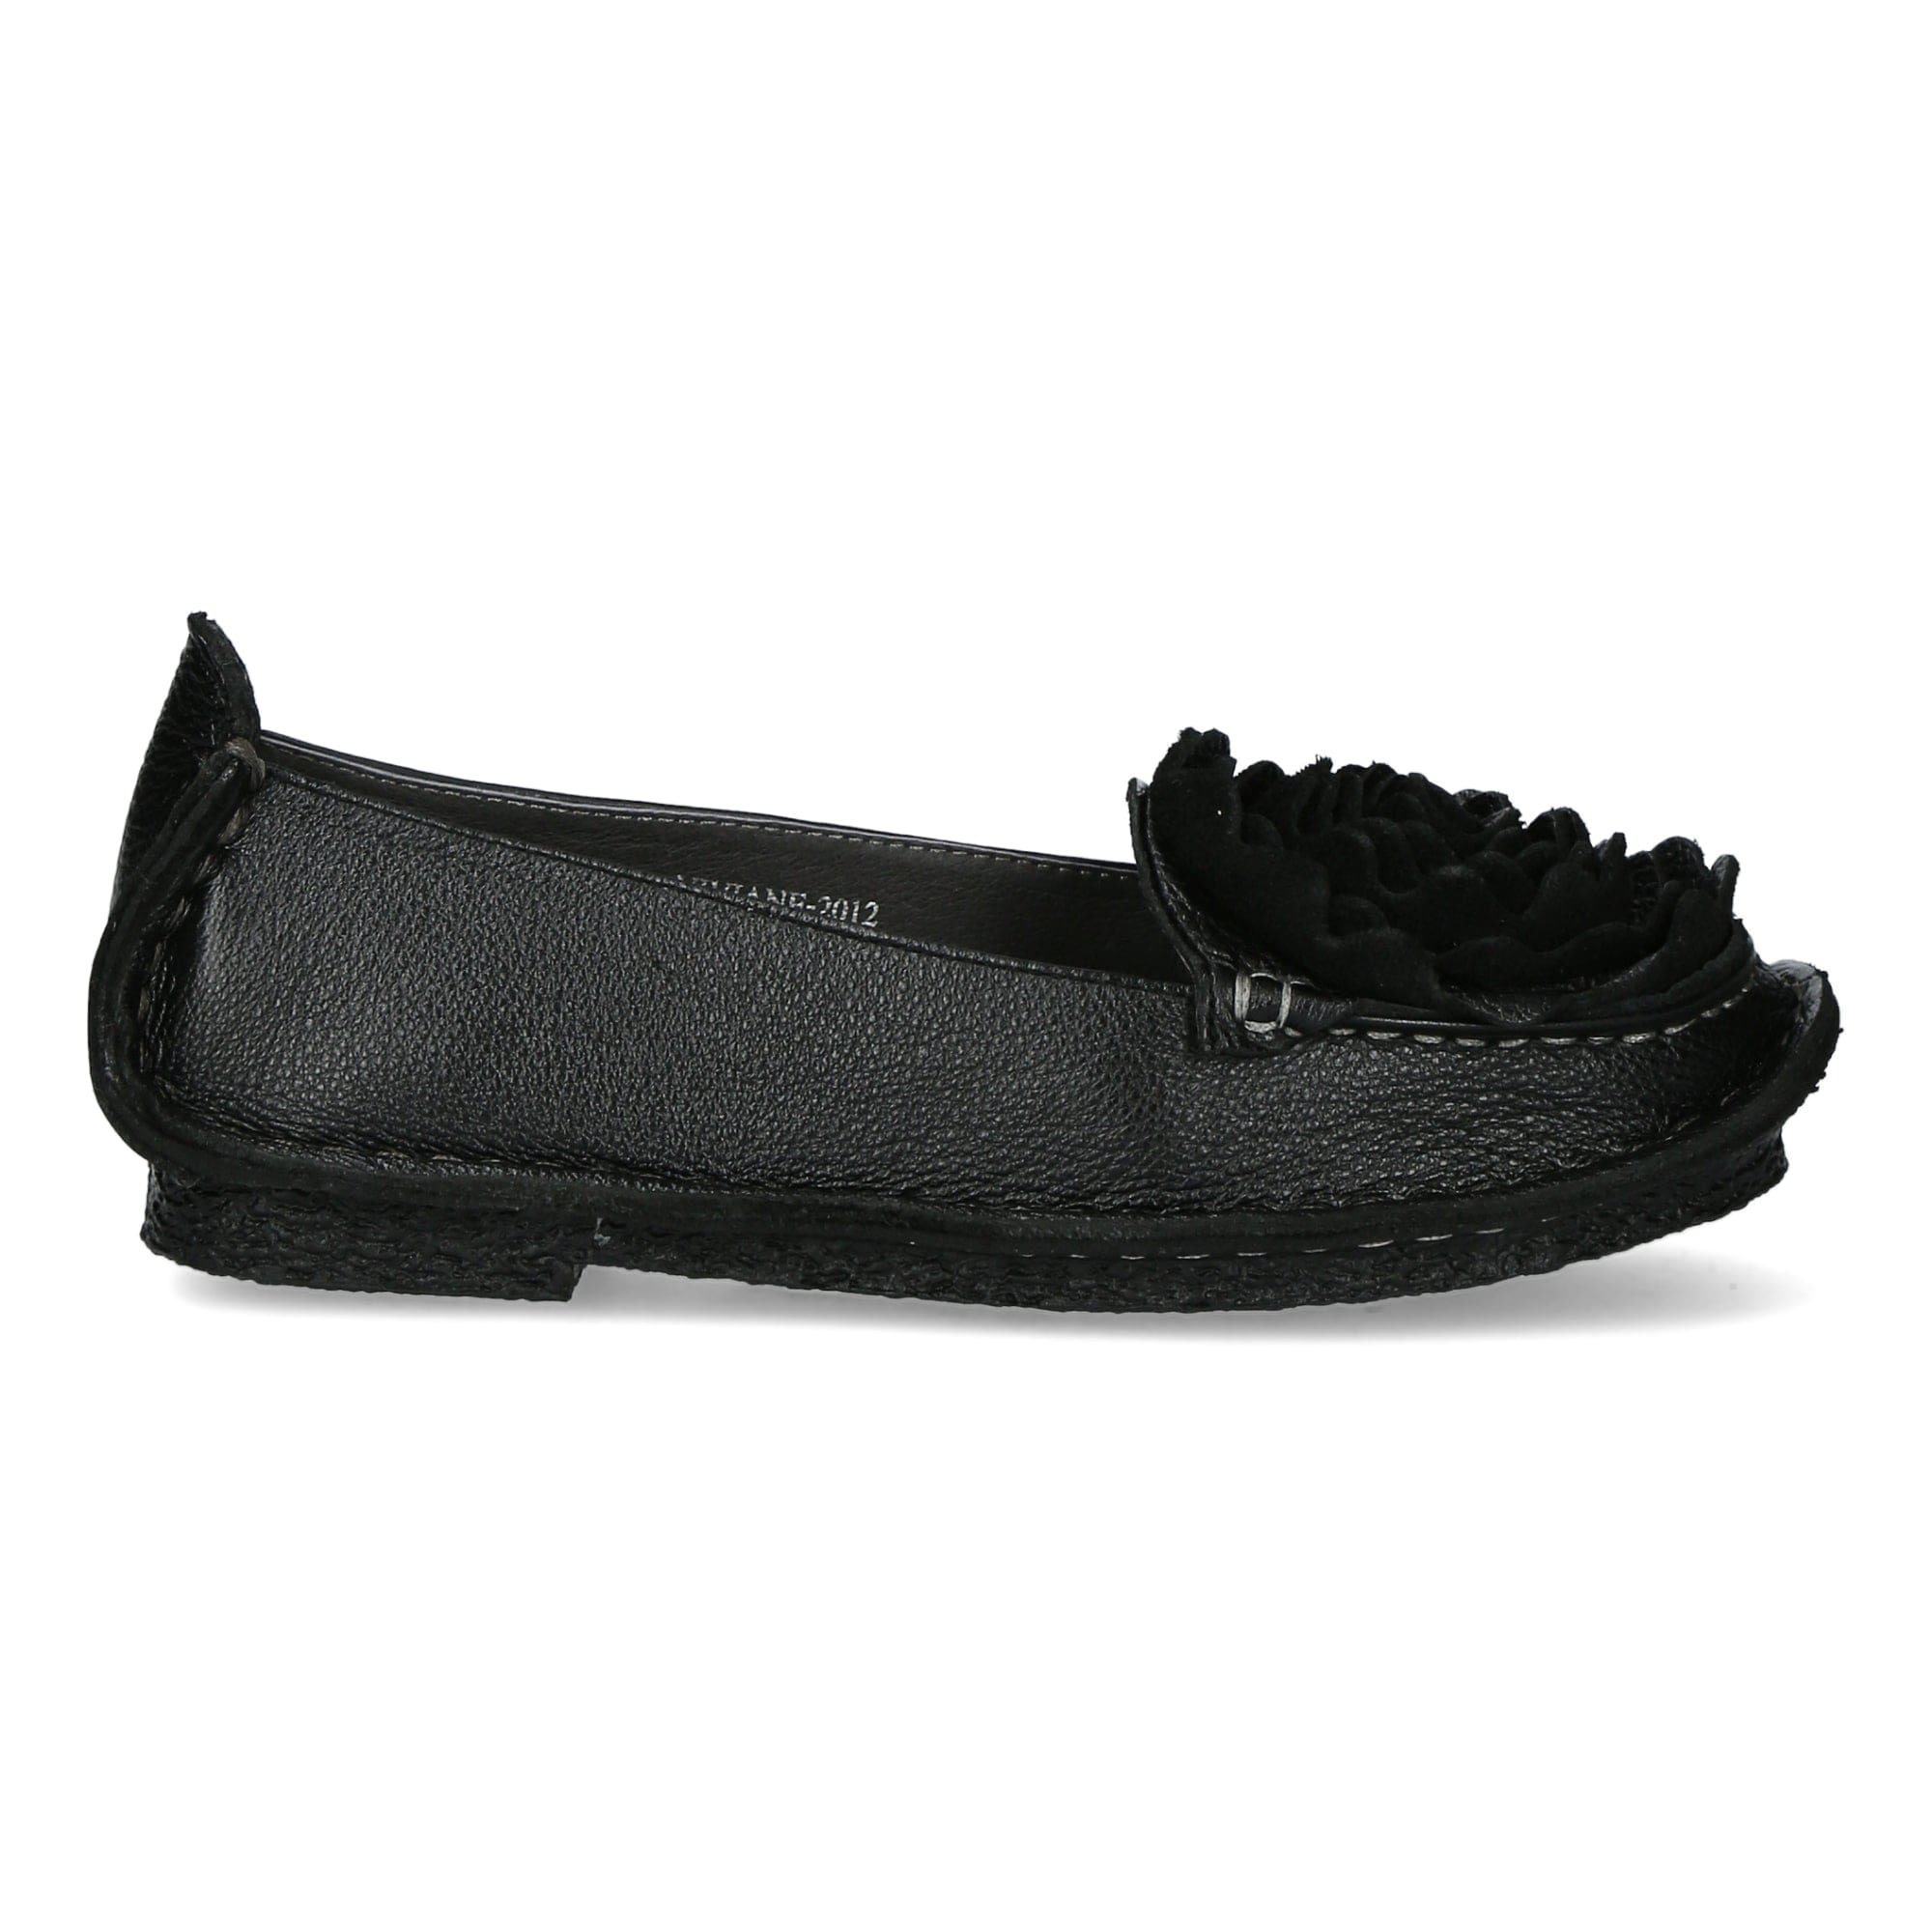 Chaussures Viviane - 35 / Noir - Mocassin